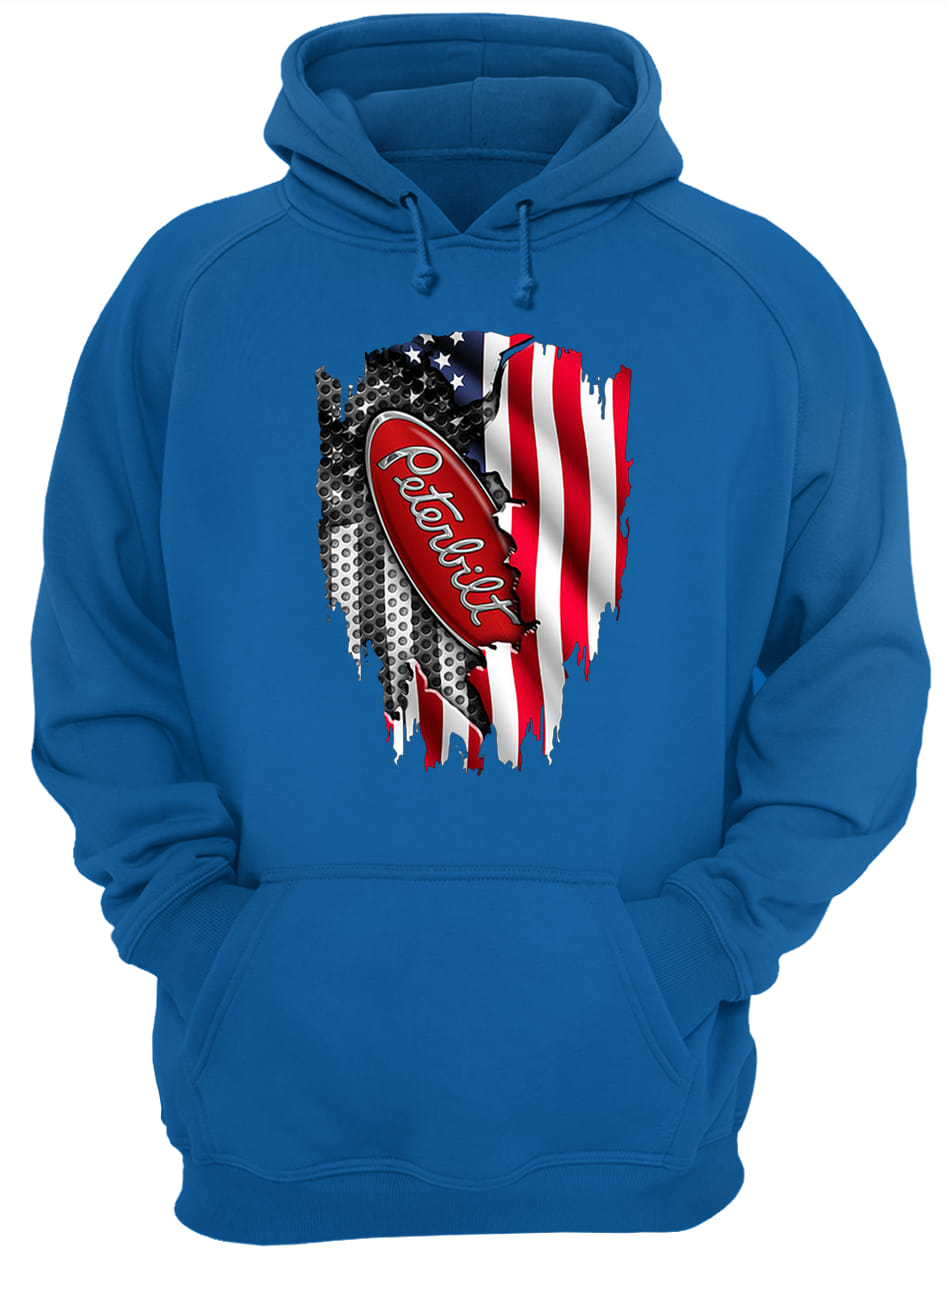 Peterbilt motors company inside the american flag hoodie